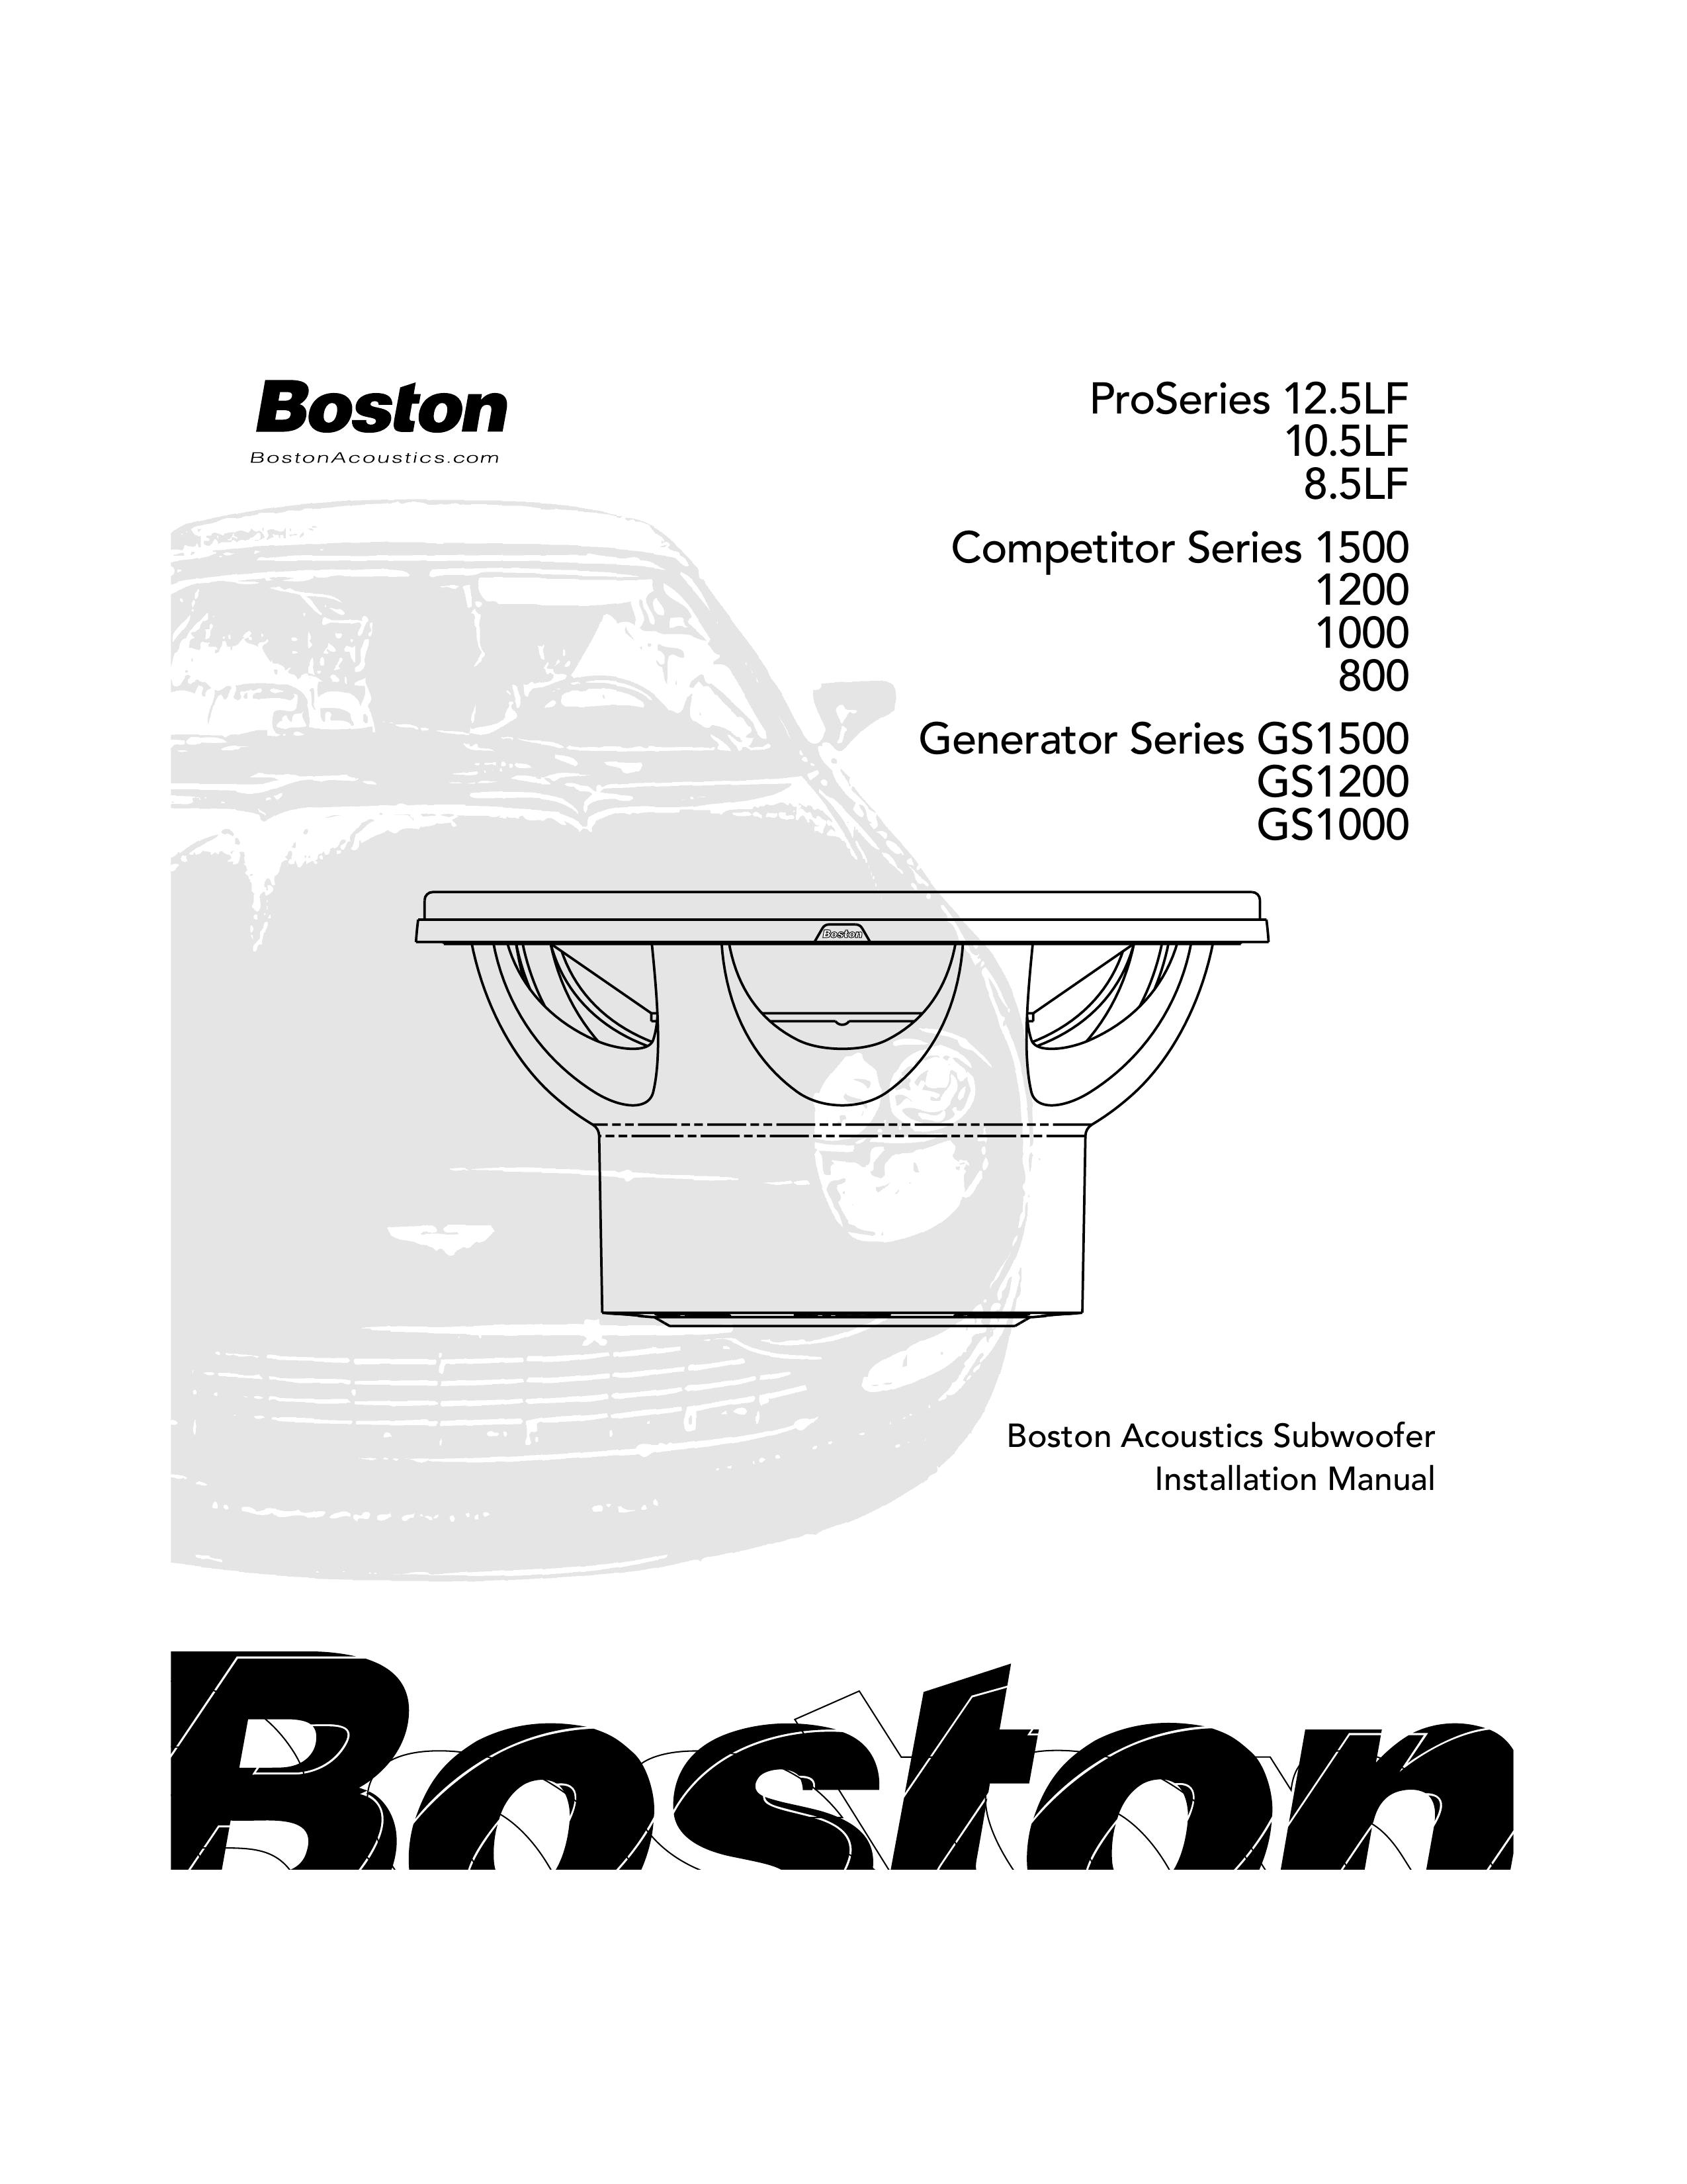 Boston Acoustics 12.5LF Recording Equipment User Manual